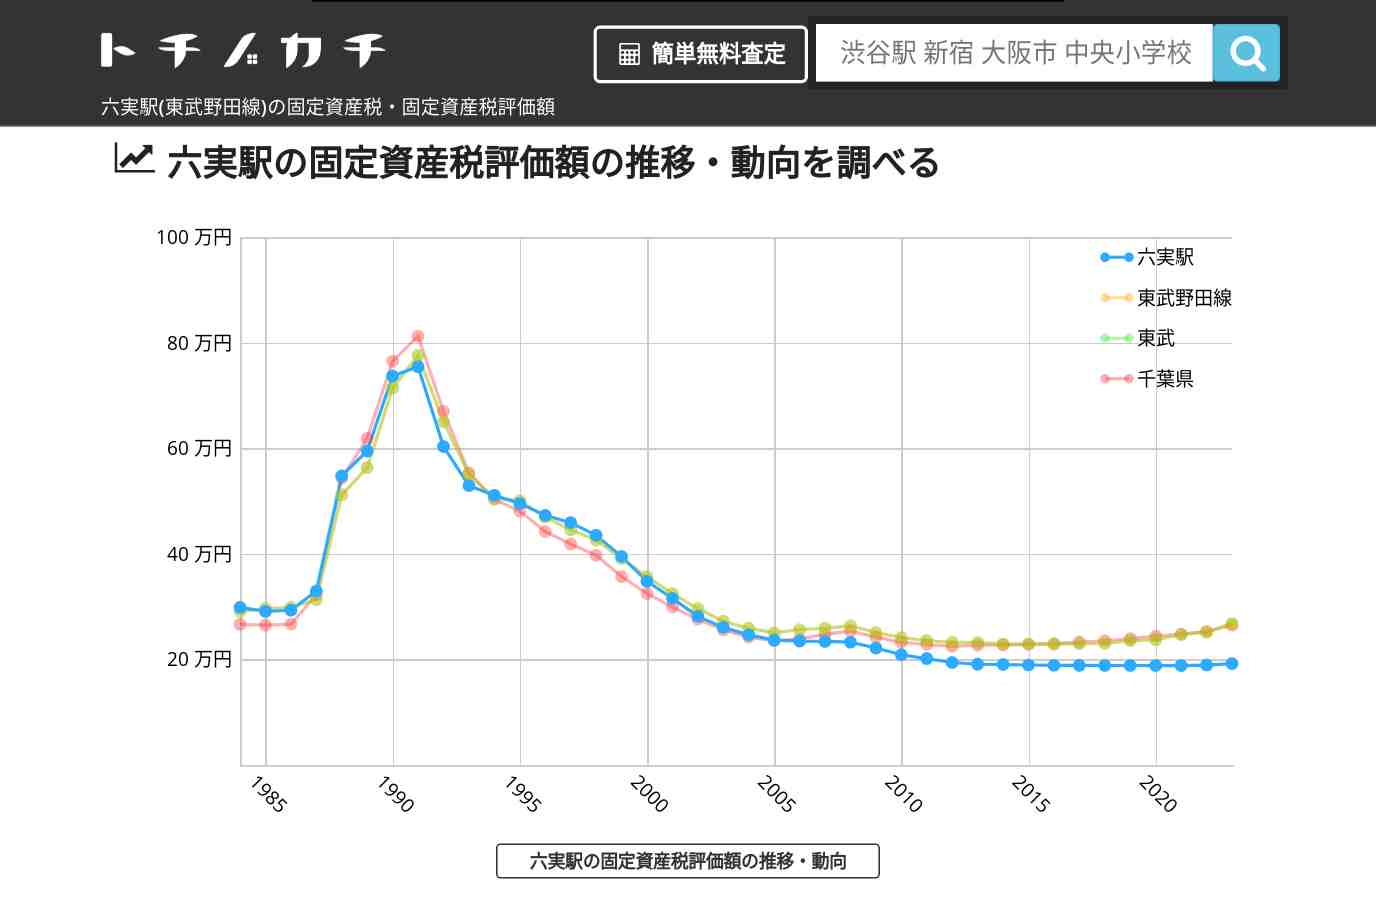 六実駅(東武野田線)の固定資産税・固定資産税評価額 | トチノカチ